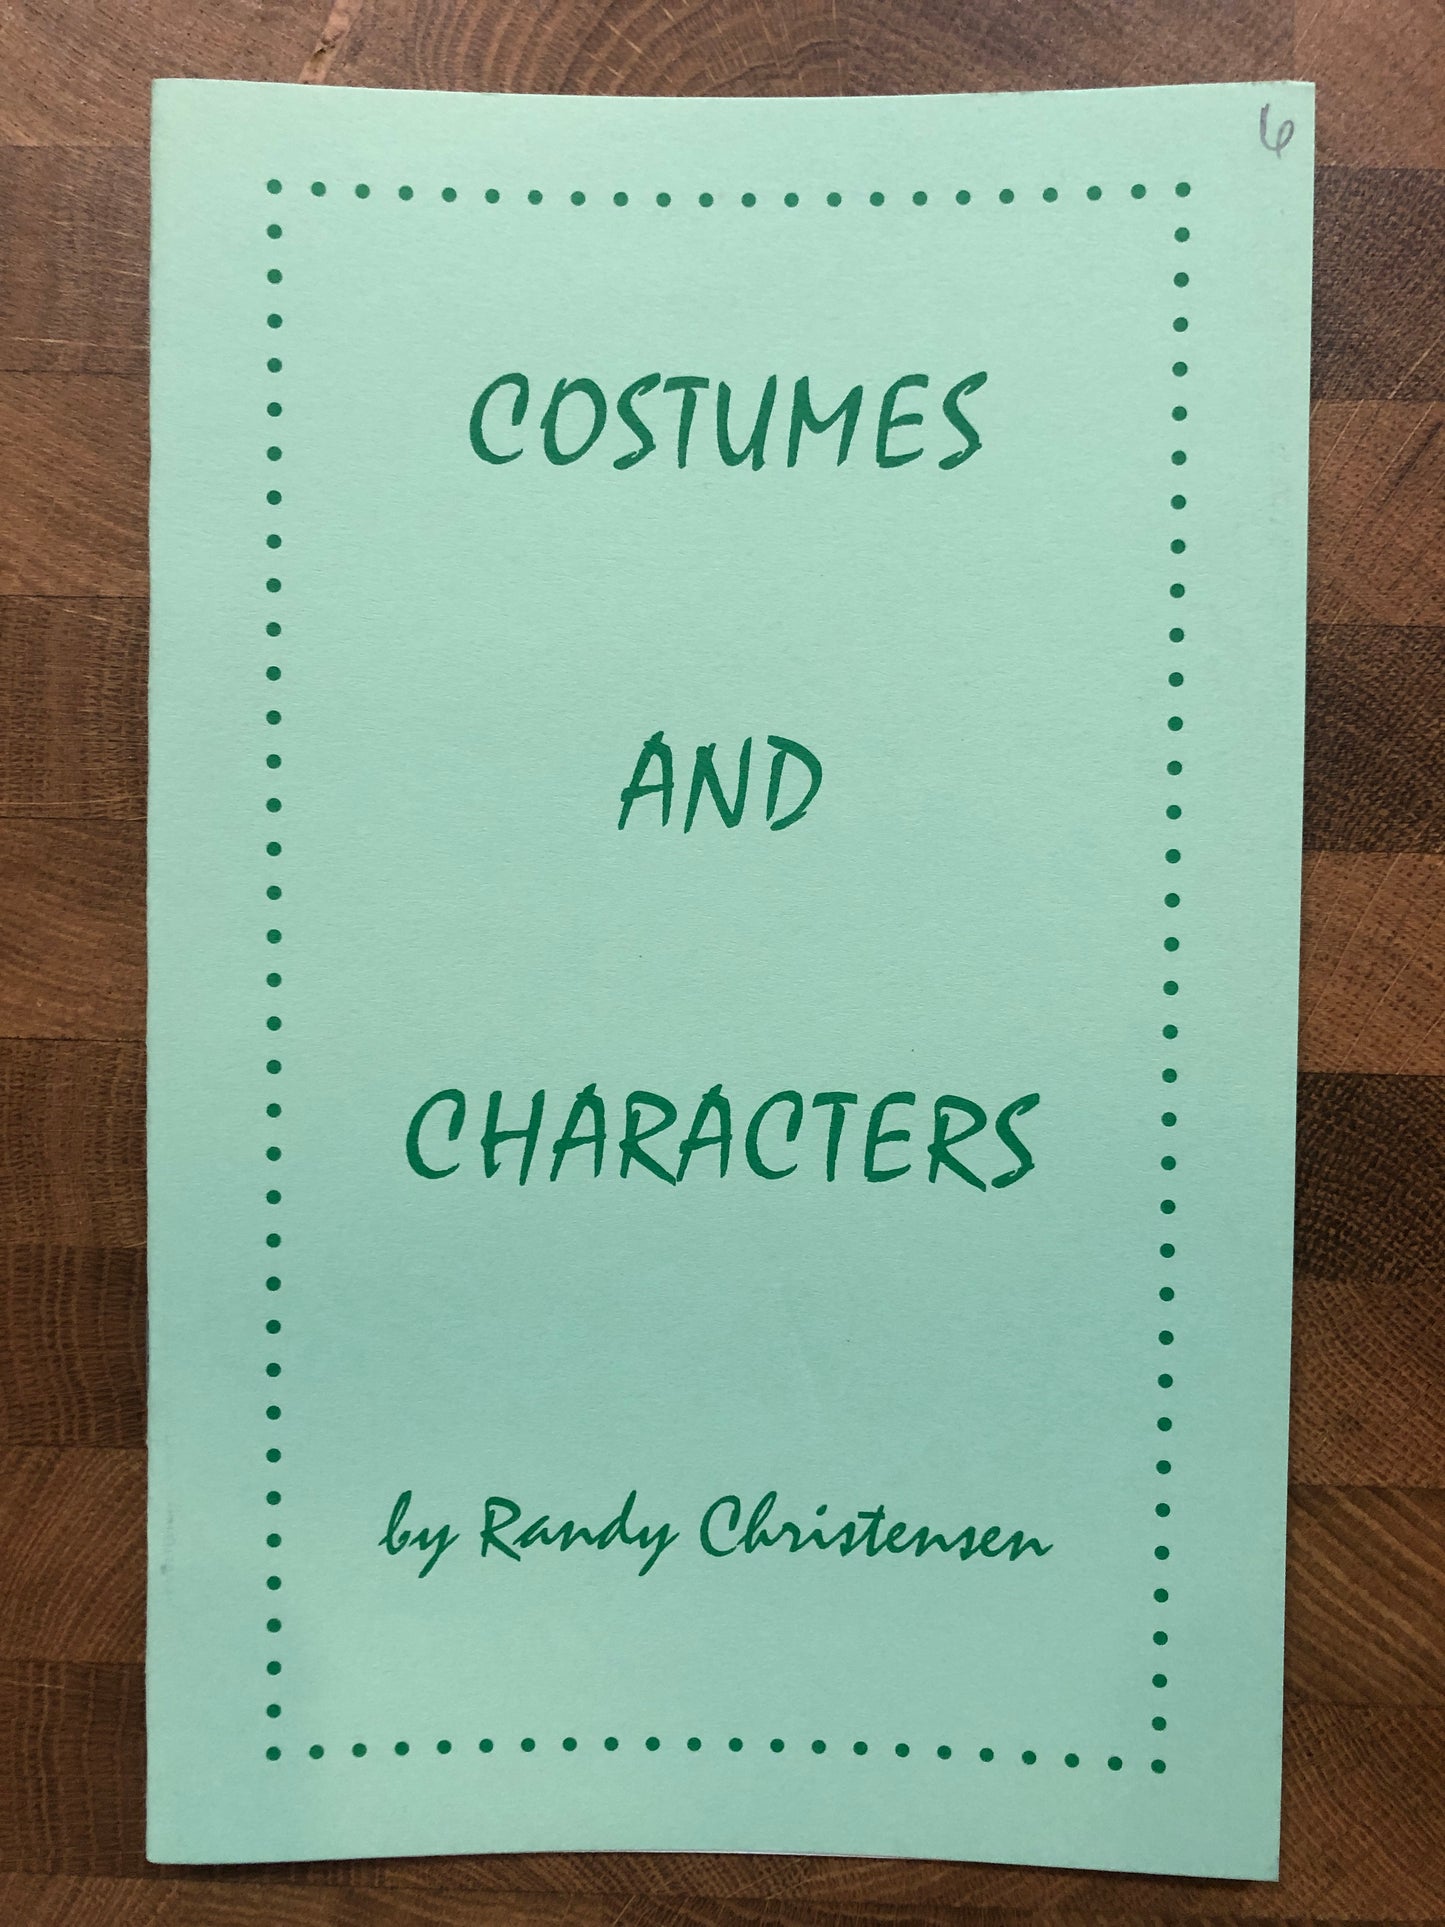 Costumes & Characters - Randy Christensen